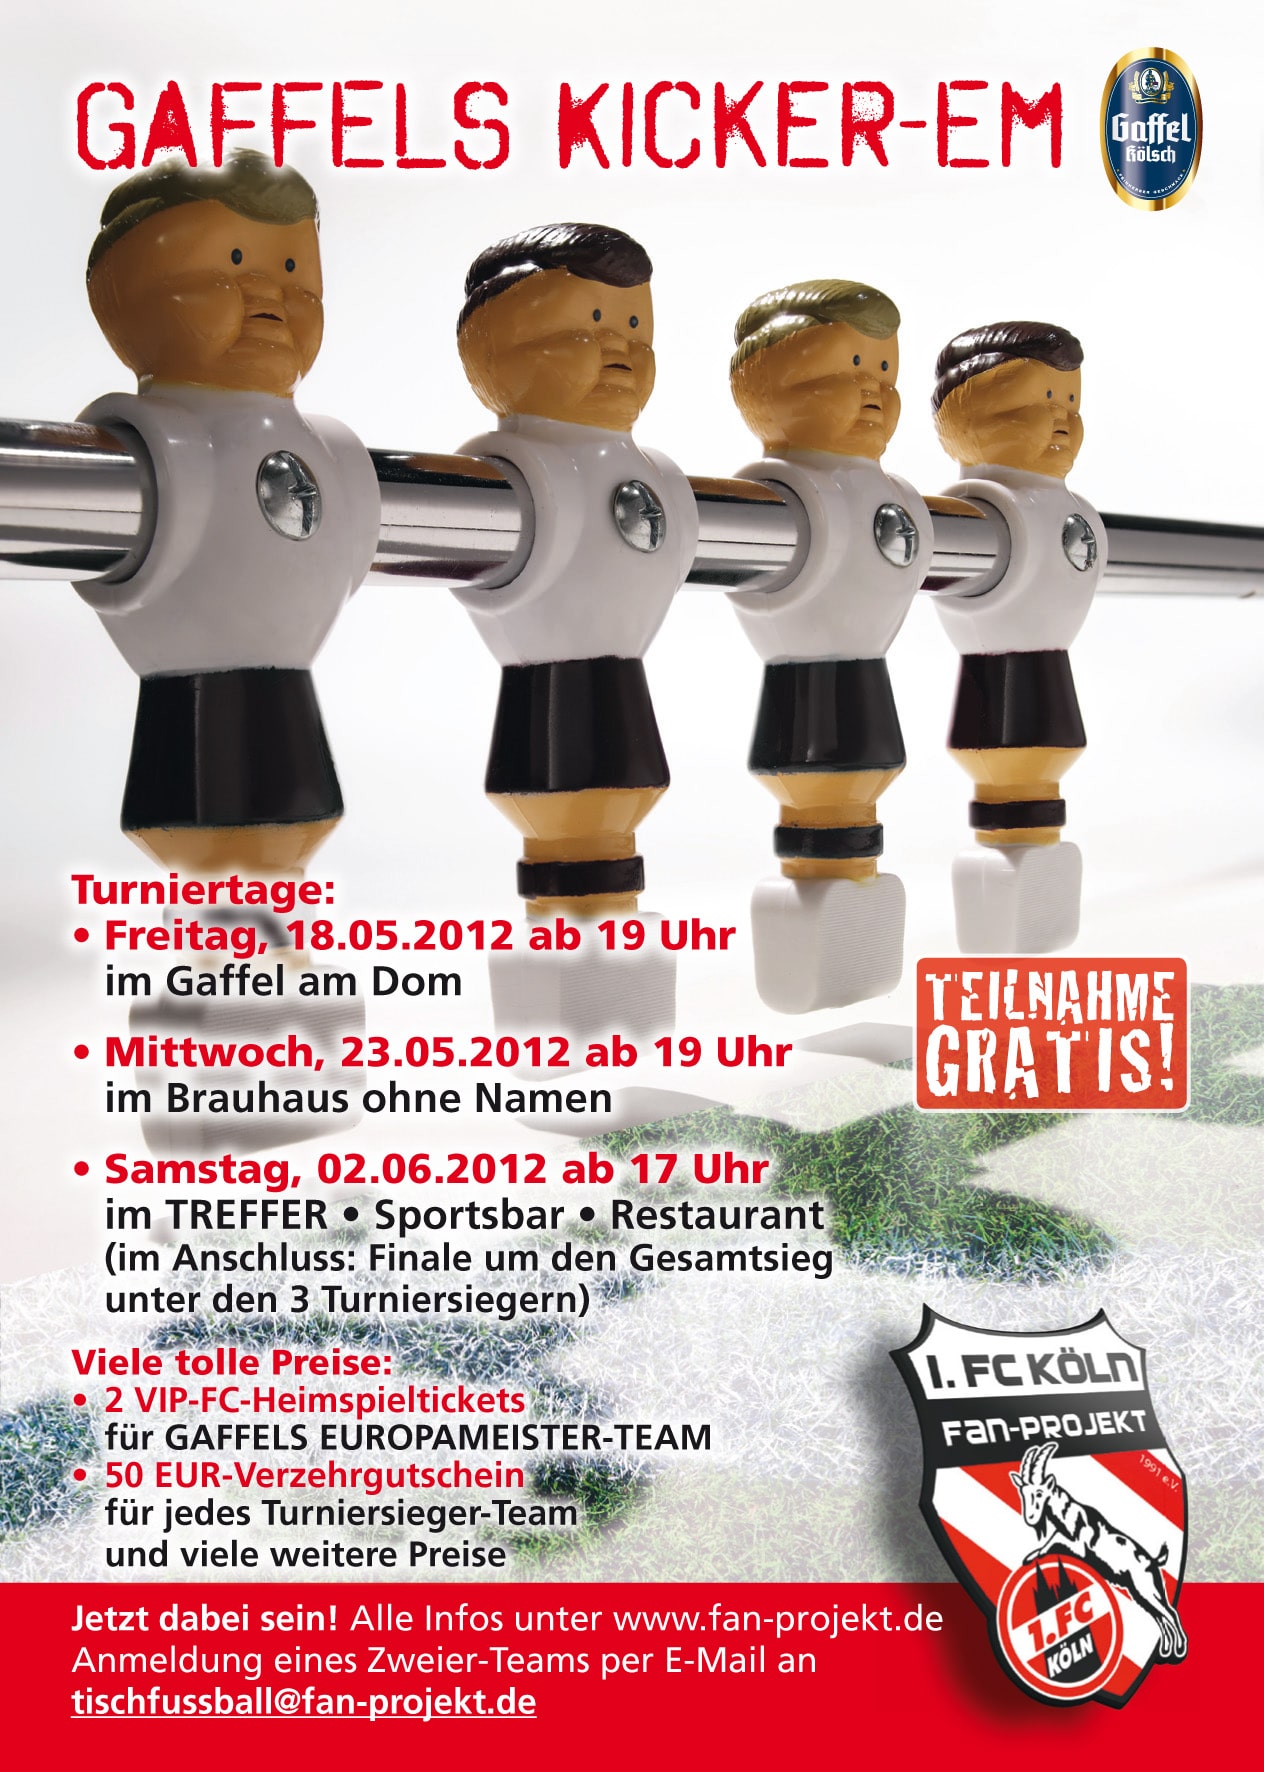 Gaffels Kicker EM – Fan-Projekt 1. FC Köln und Gaffel spielen Tischfußballturnier aus